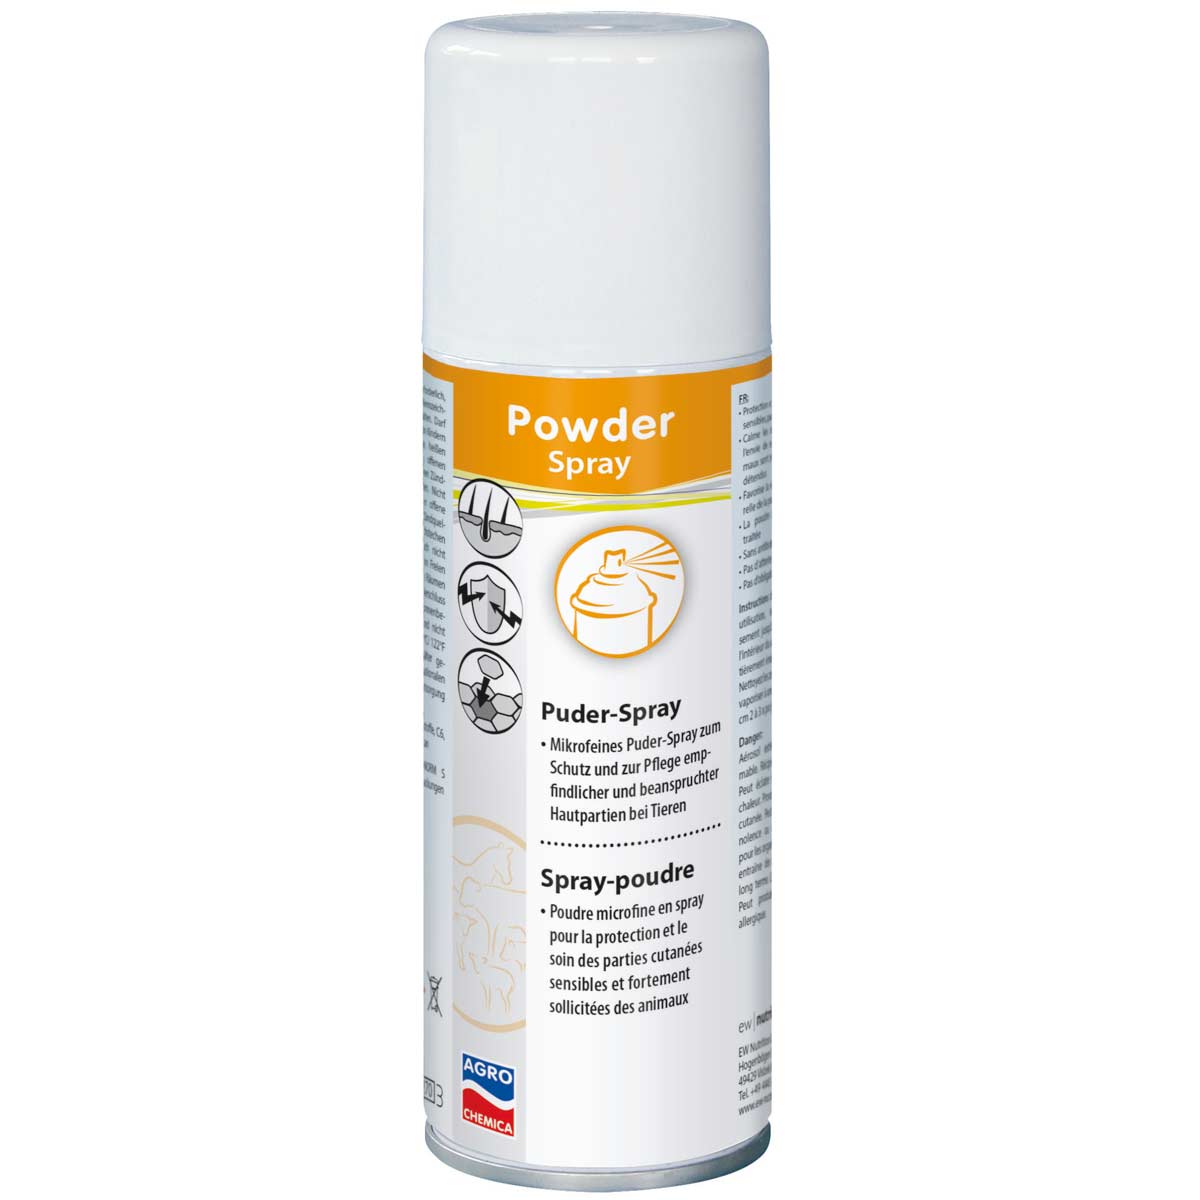 Powder Spray Skin Care